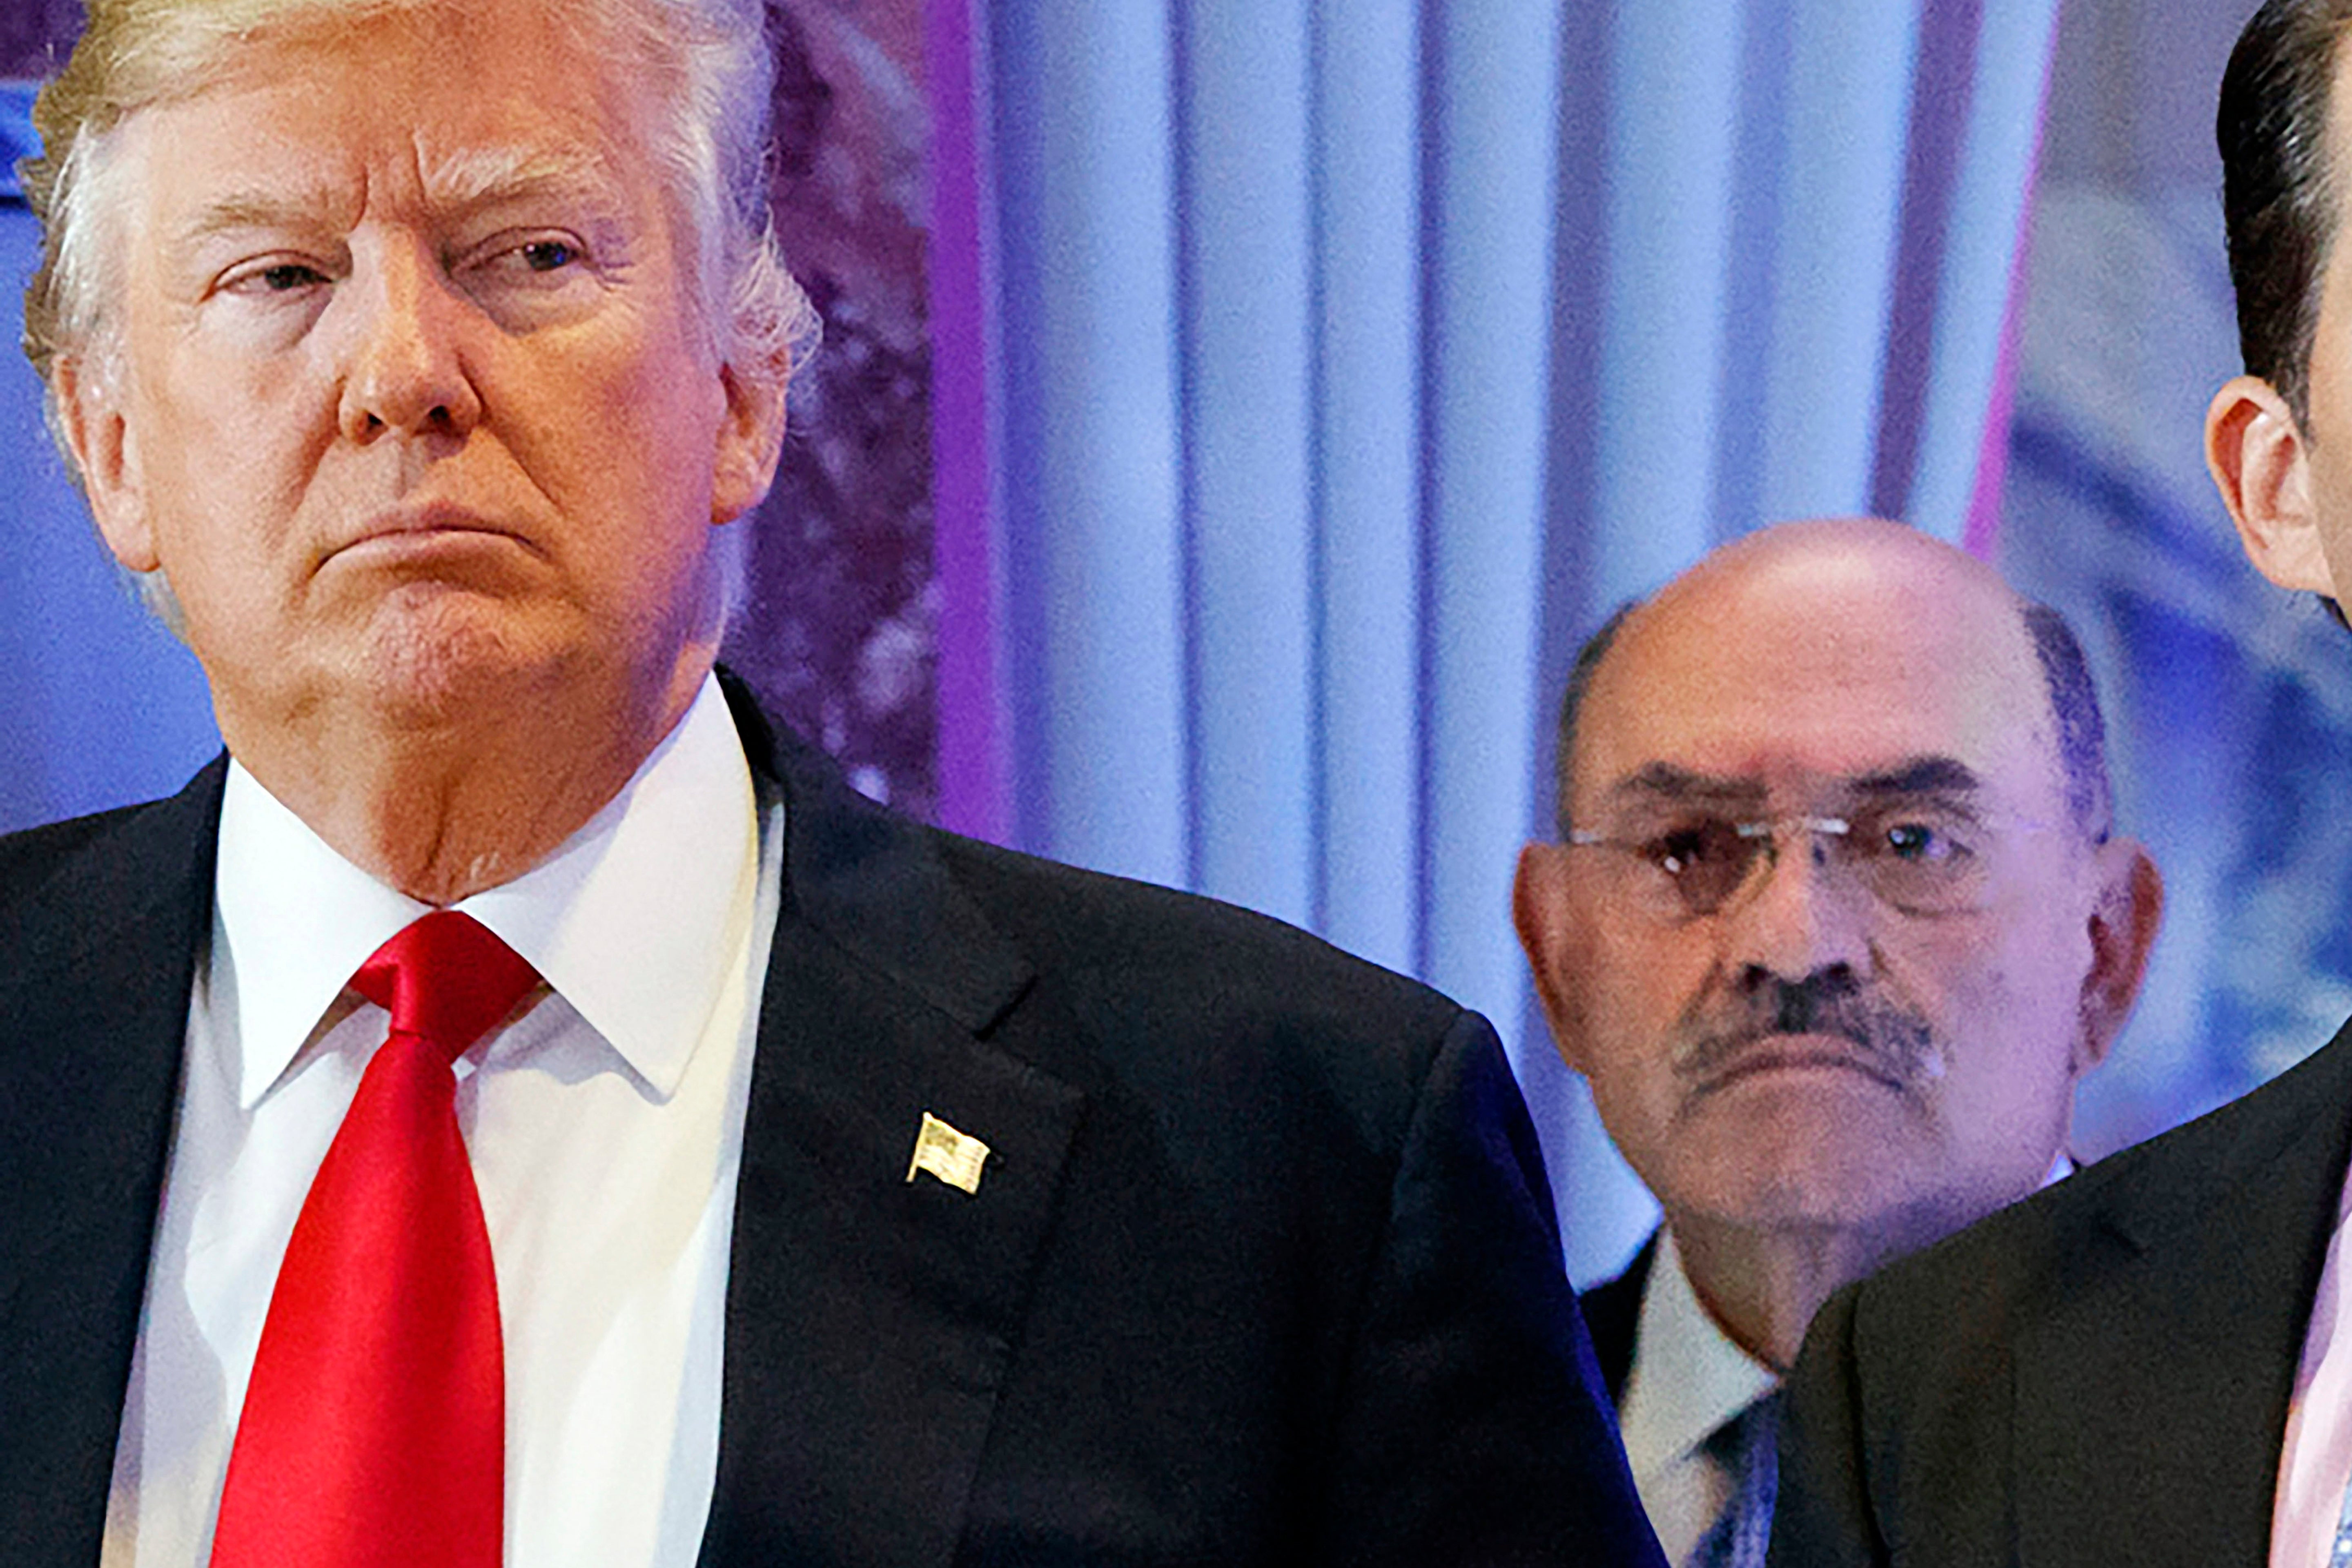 Former Trump Organization CFO Allen Weisselberg appears with Donald Trump in 2017.